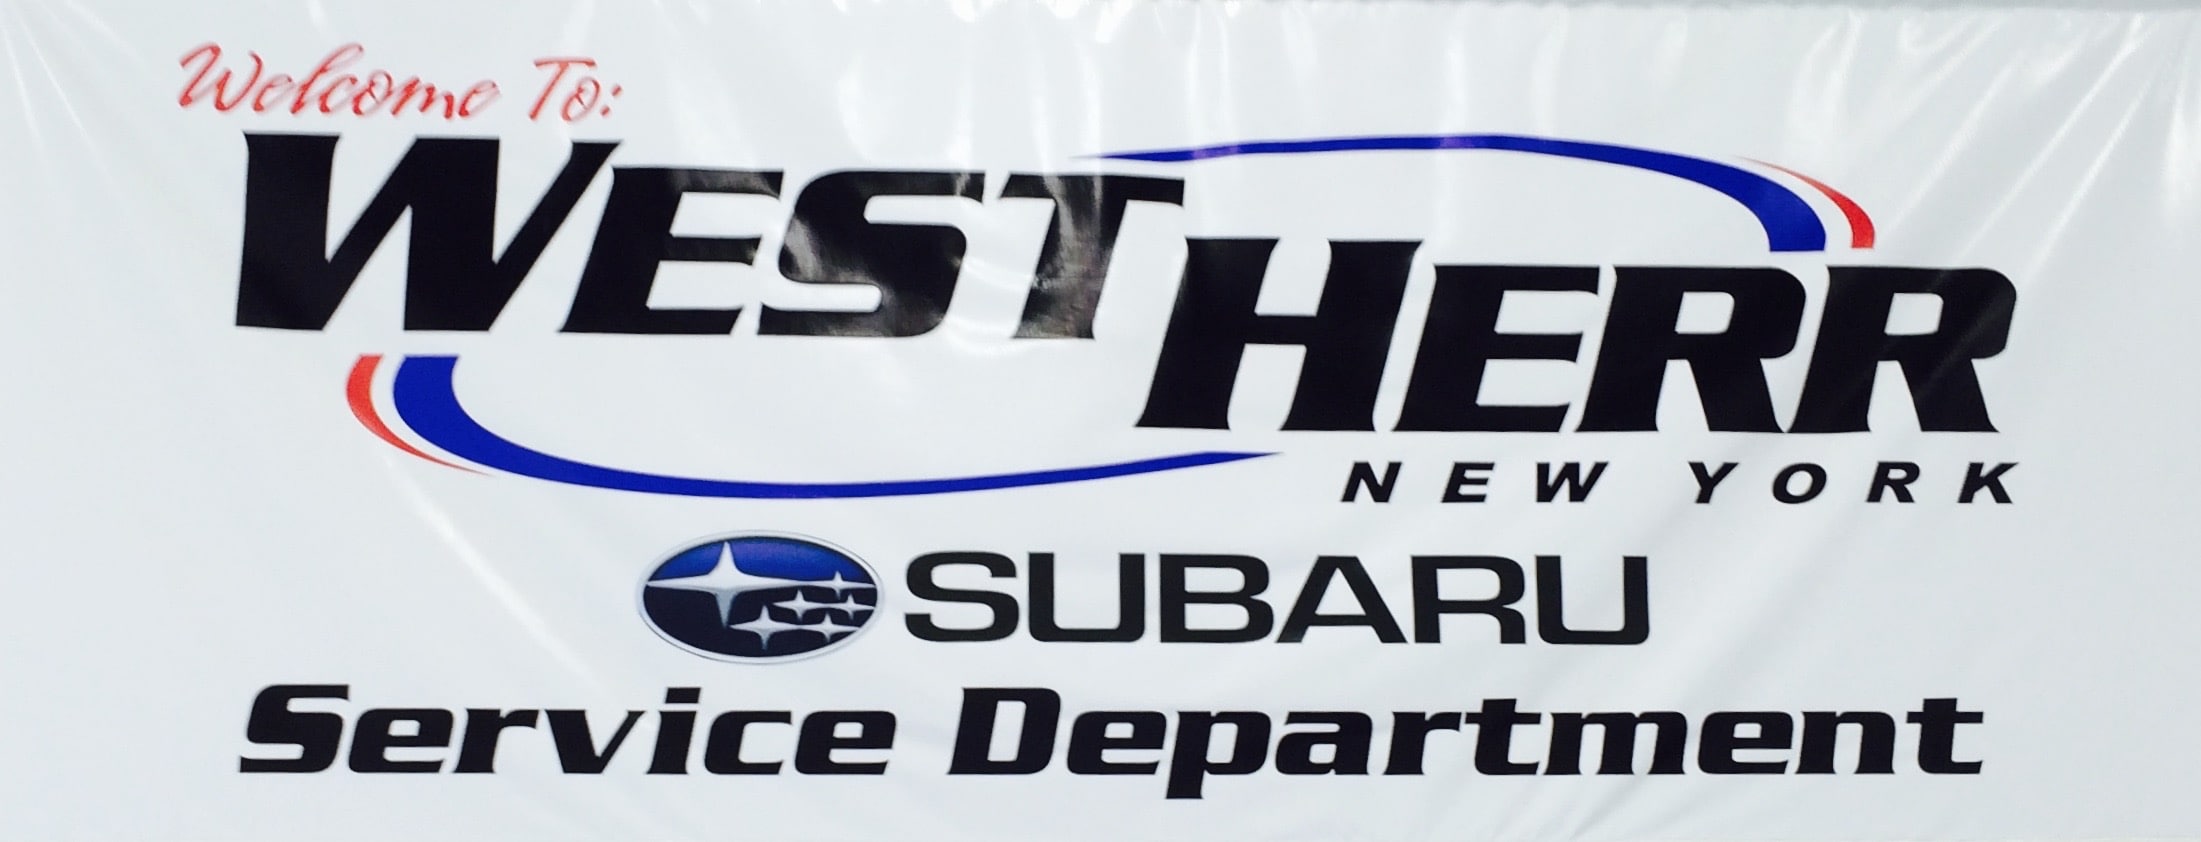 Subaru Car Repairs West Herr